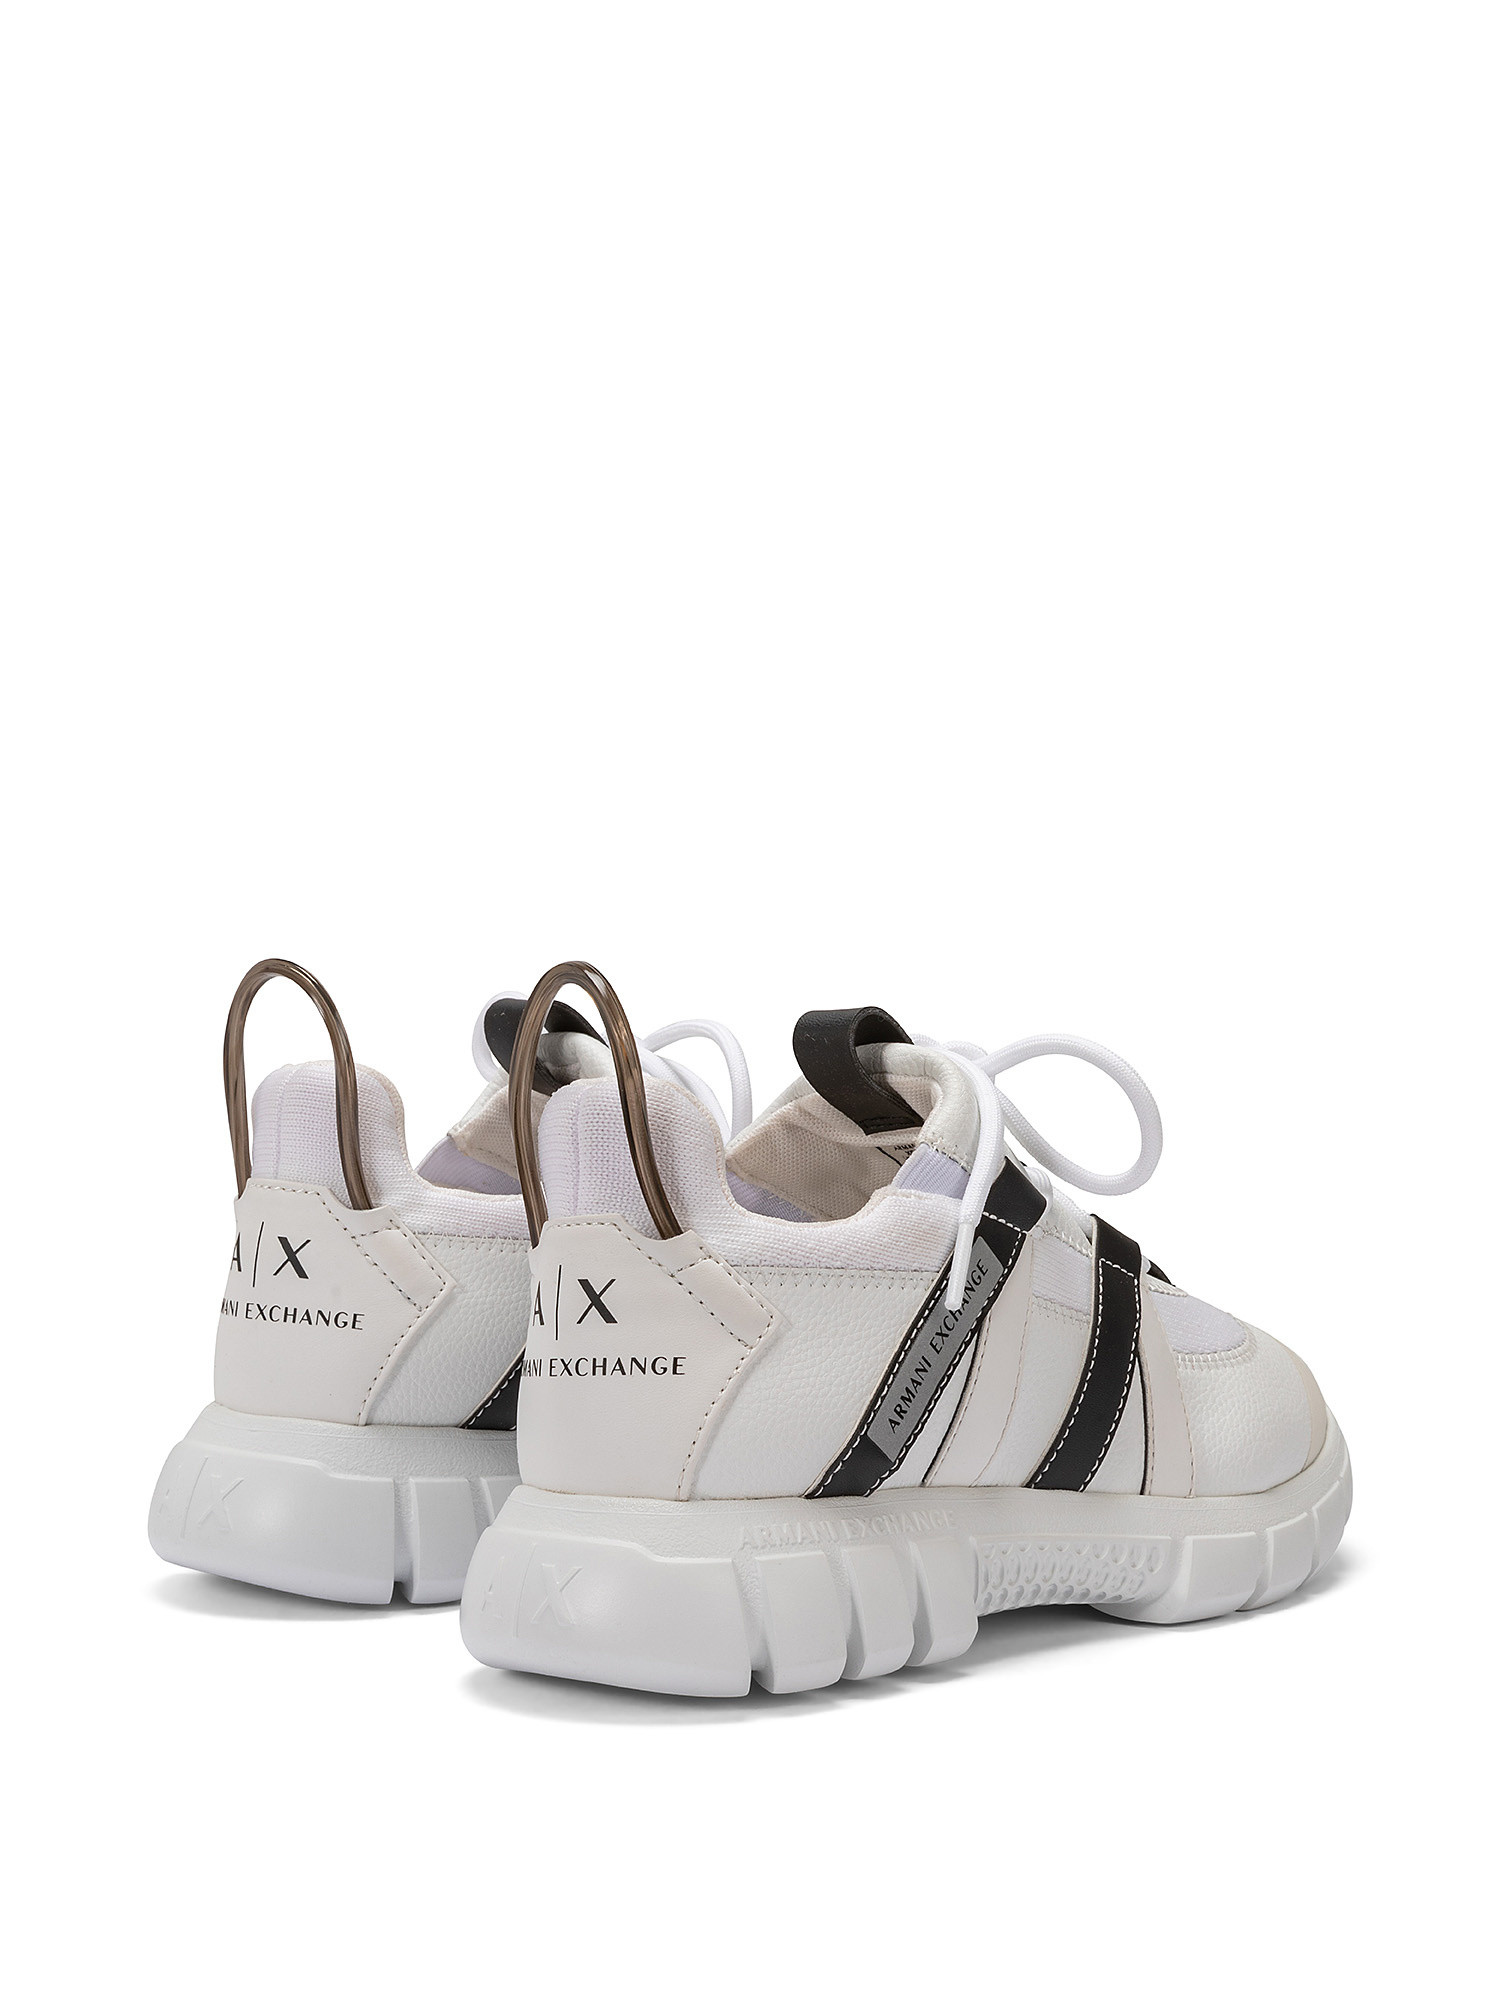 Sneakers, Bianco, large